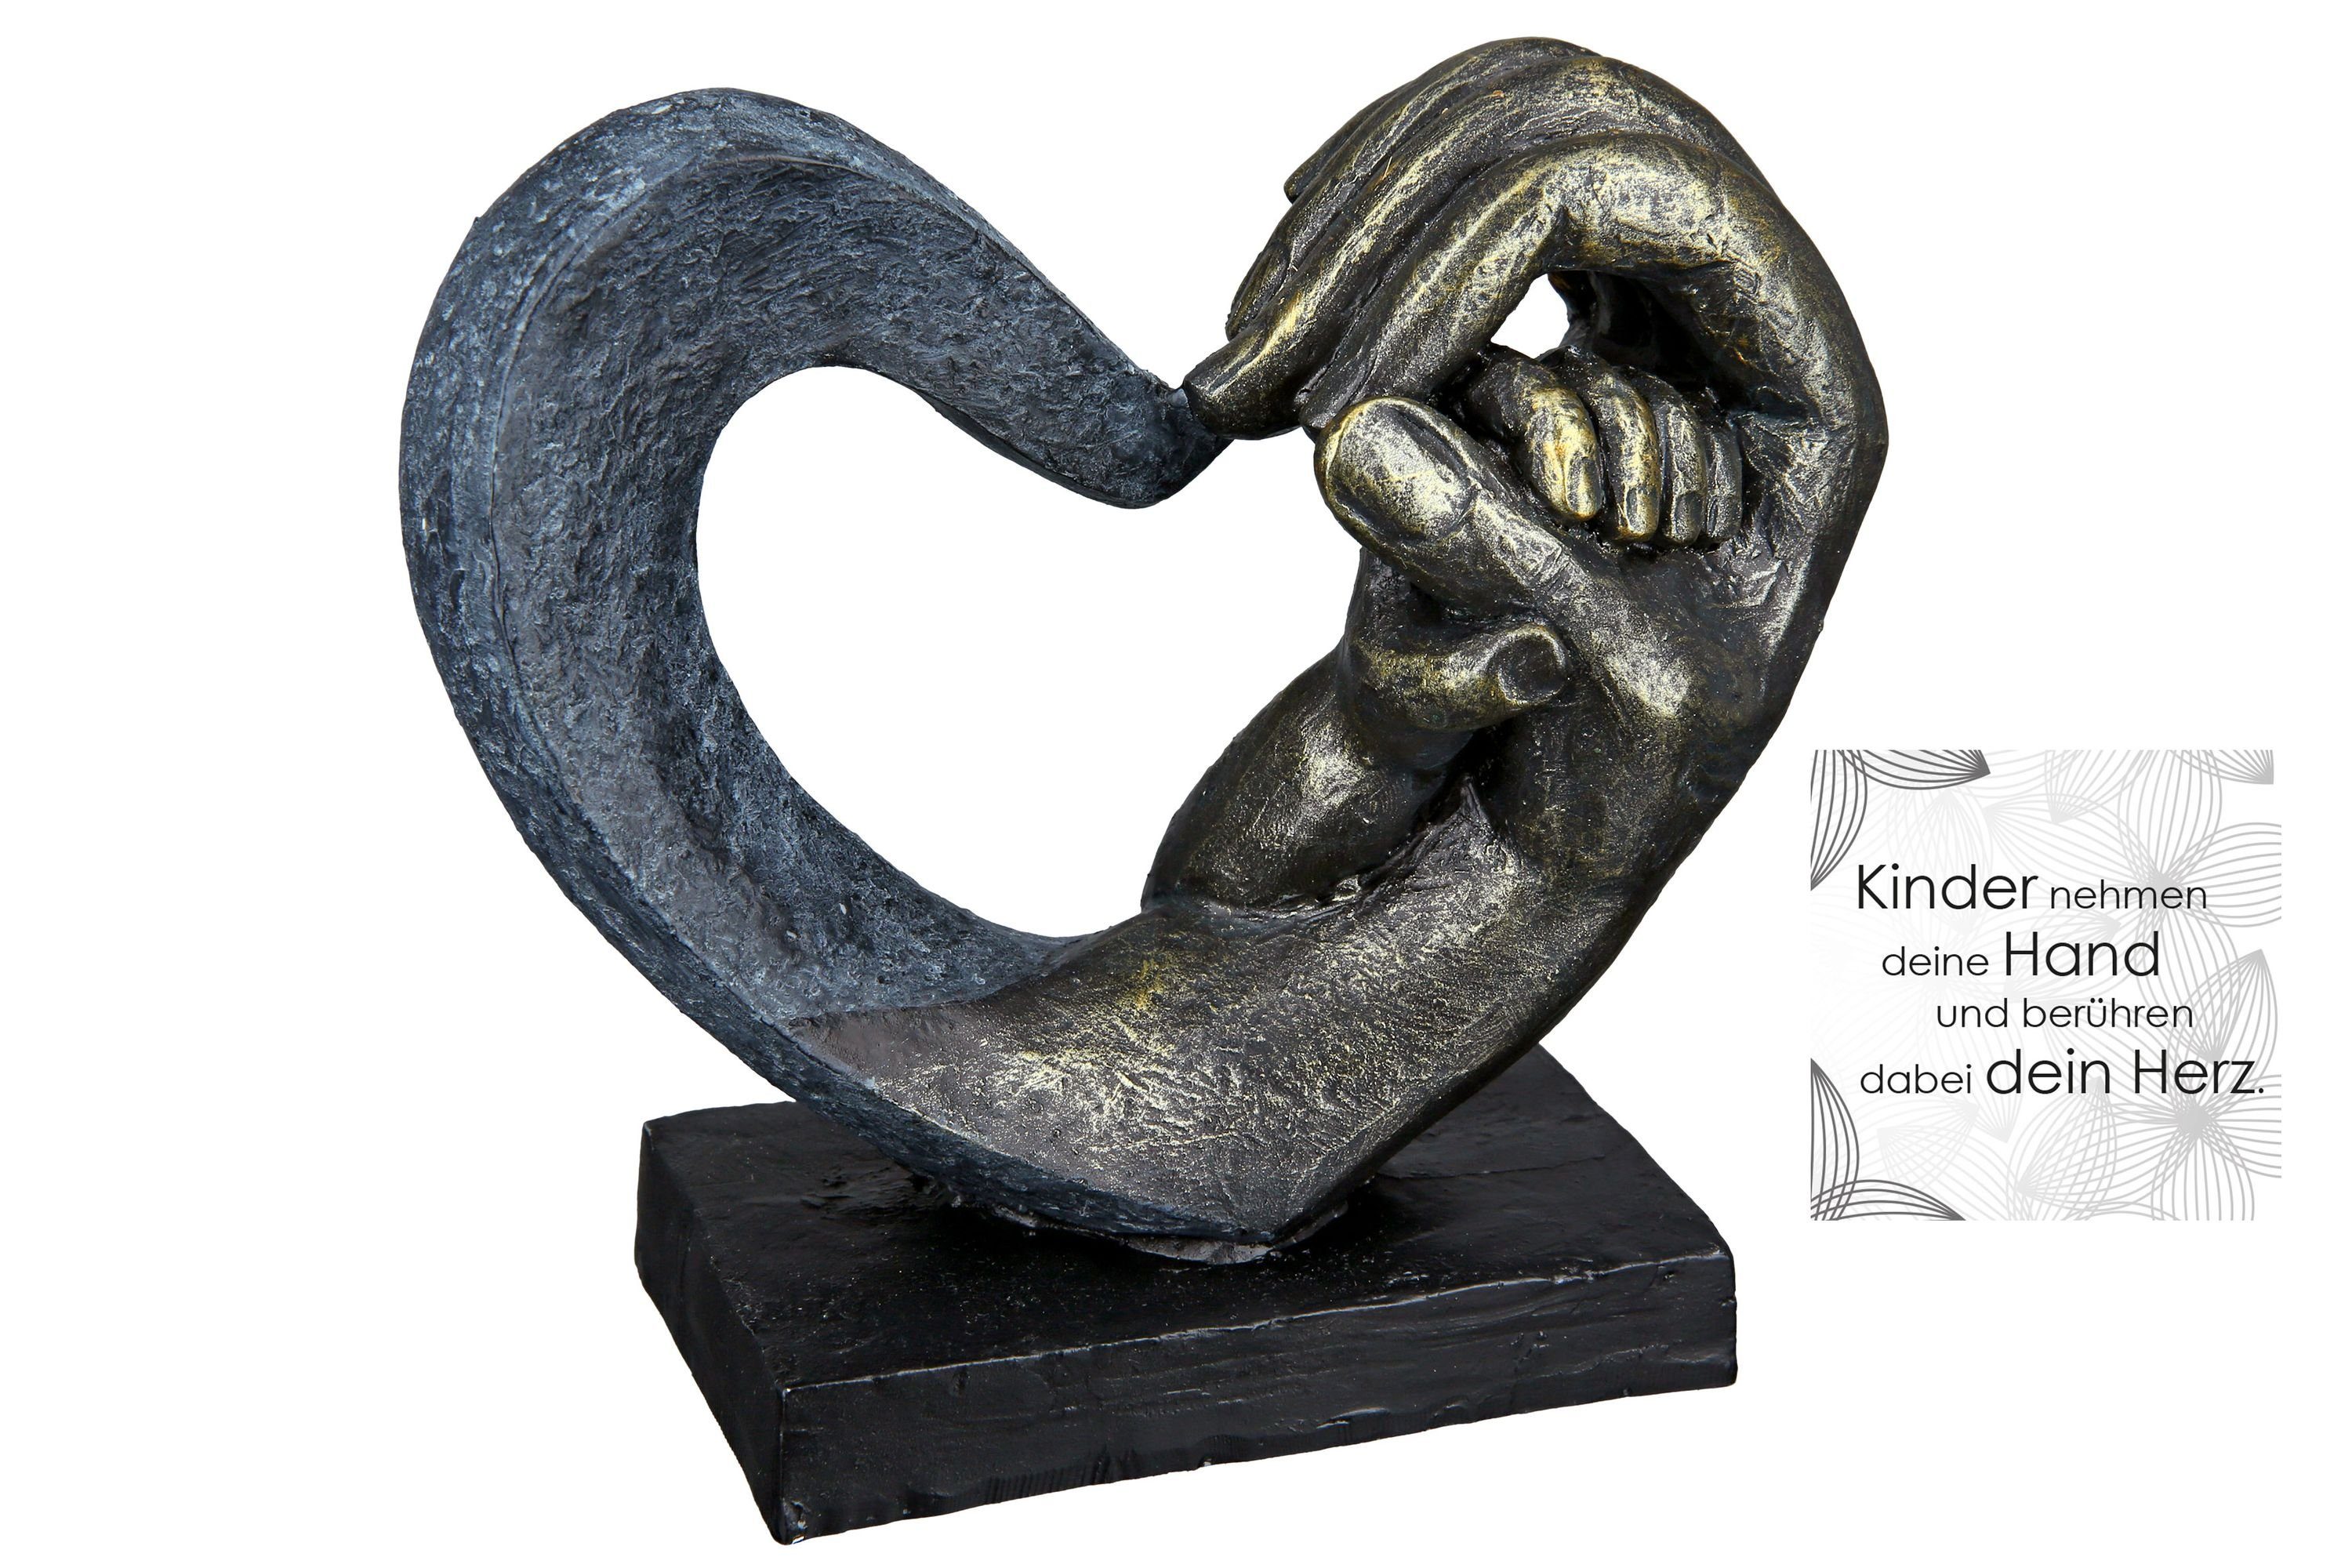 H. of Dekofigur Love GILDE B.16cm Skulptur H.14cm x 16cm, bronze-grau Hands x 14cm x Maße: - - GILDE B.